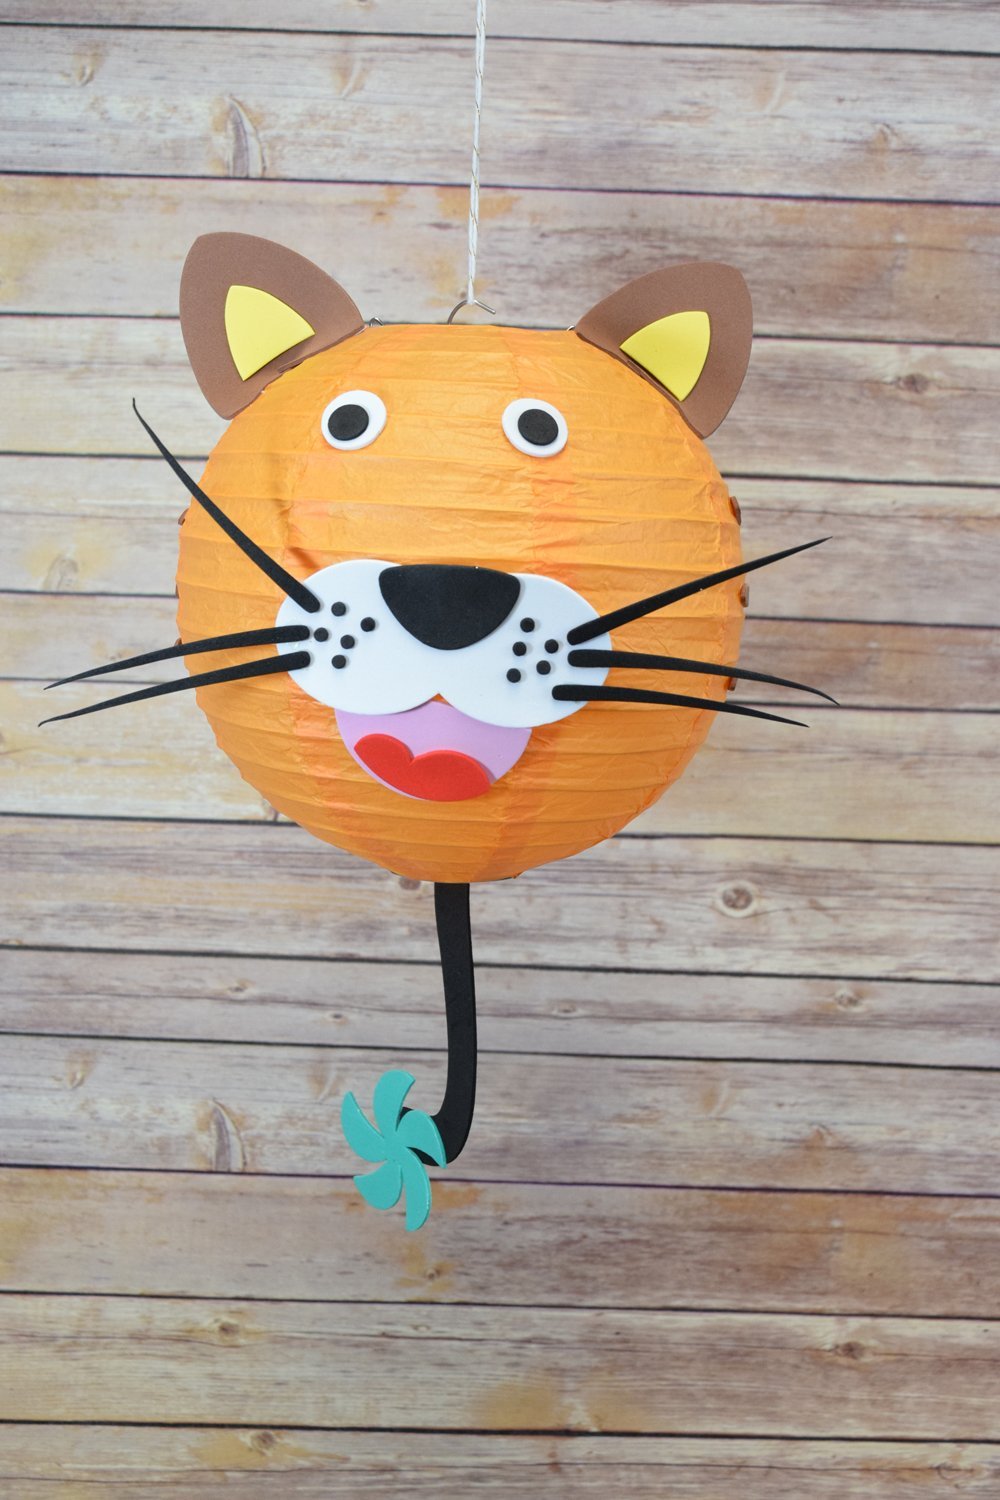 8&quot; Paper Lantern Animal Face DIY Kit - Tiger (Kid Craft Project) - PaperLanternStore.com - Paper Lanterns, Decor, Party Lights &amp; More